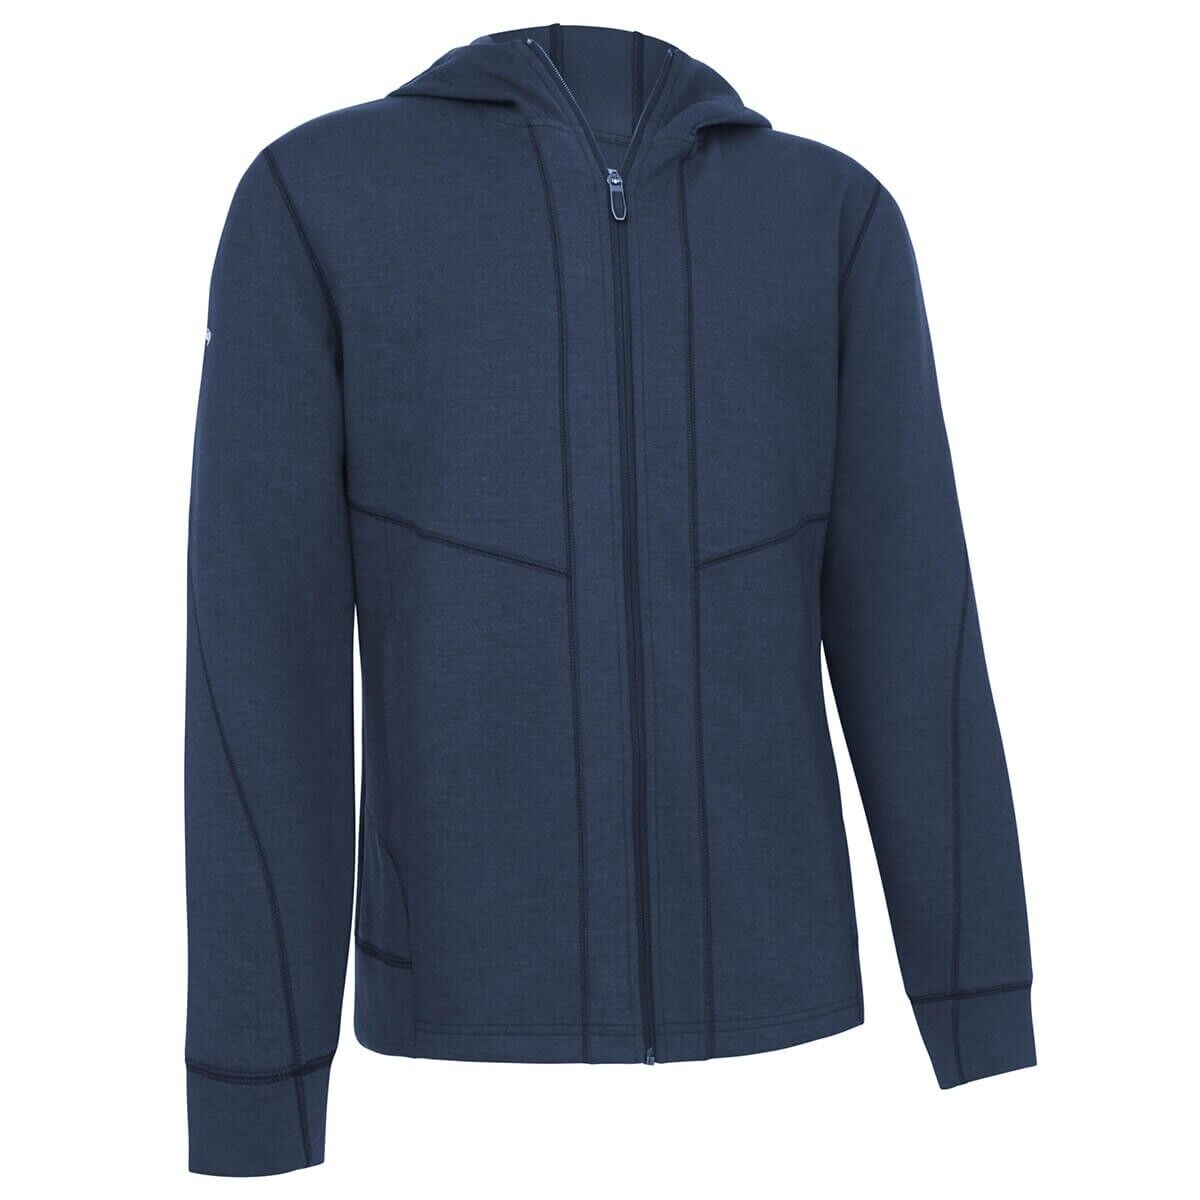 callaway weather series thermal hooded full zip sweater dark navy heather uk size xl